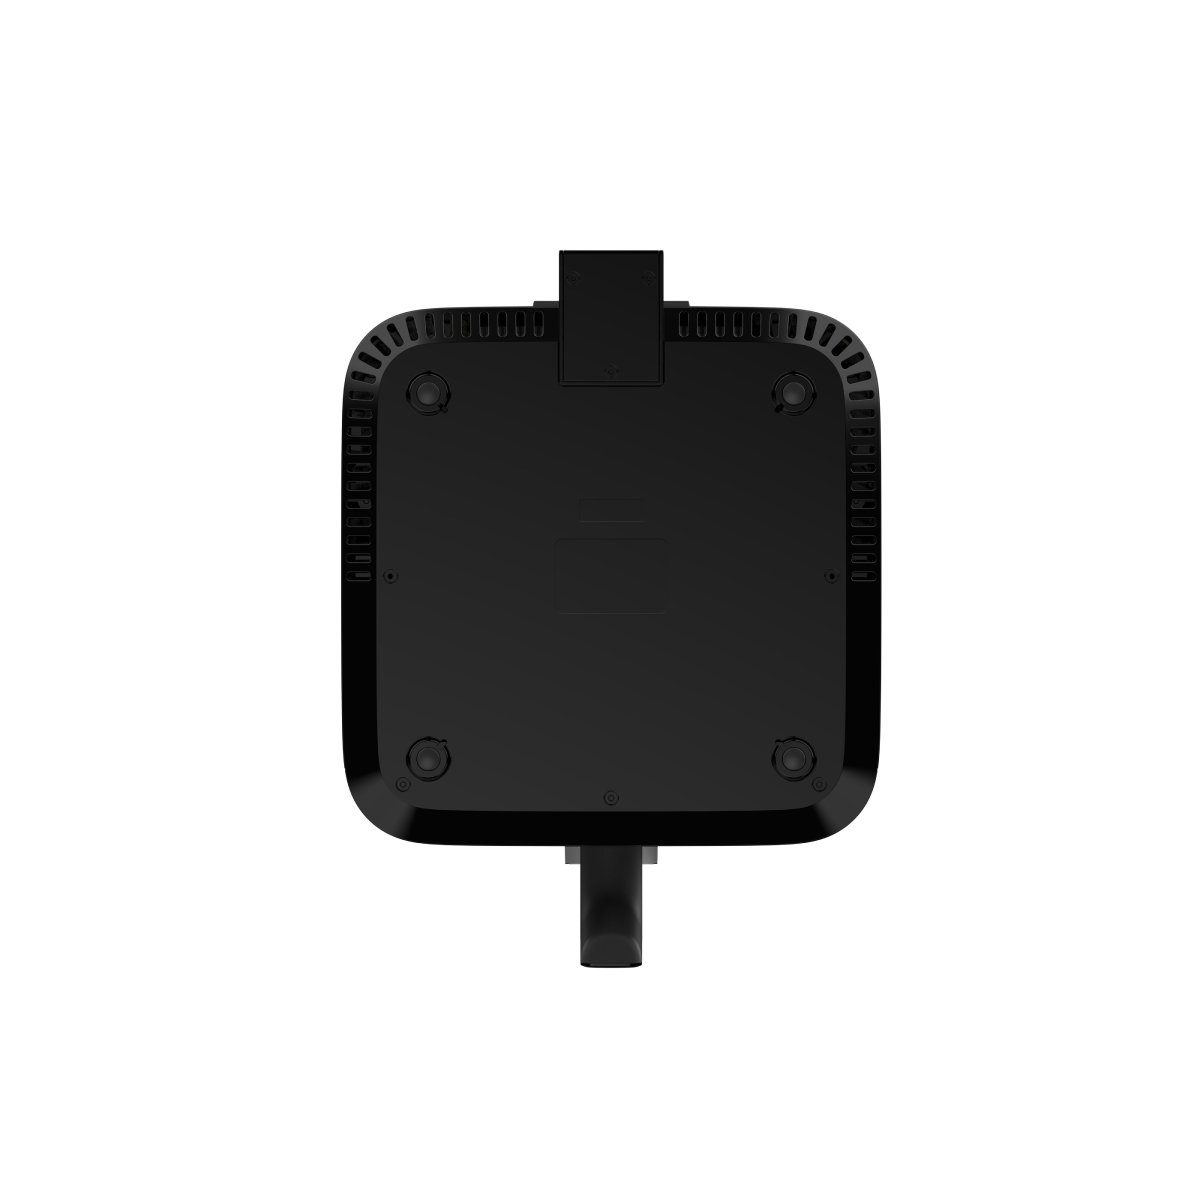 Xiaomi Smart Air Fryer 6.5L (Black), , large image number 5